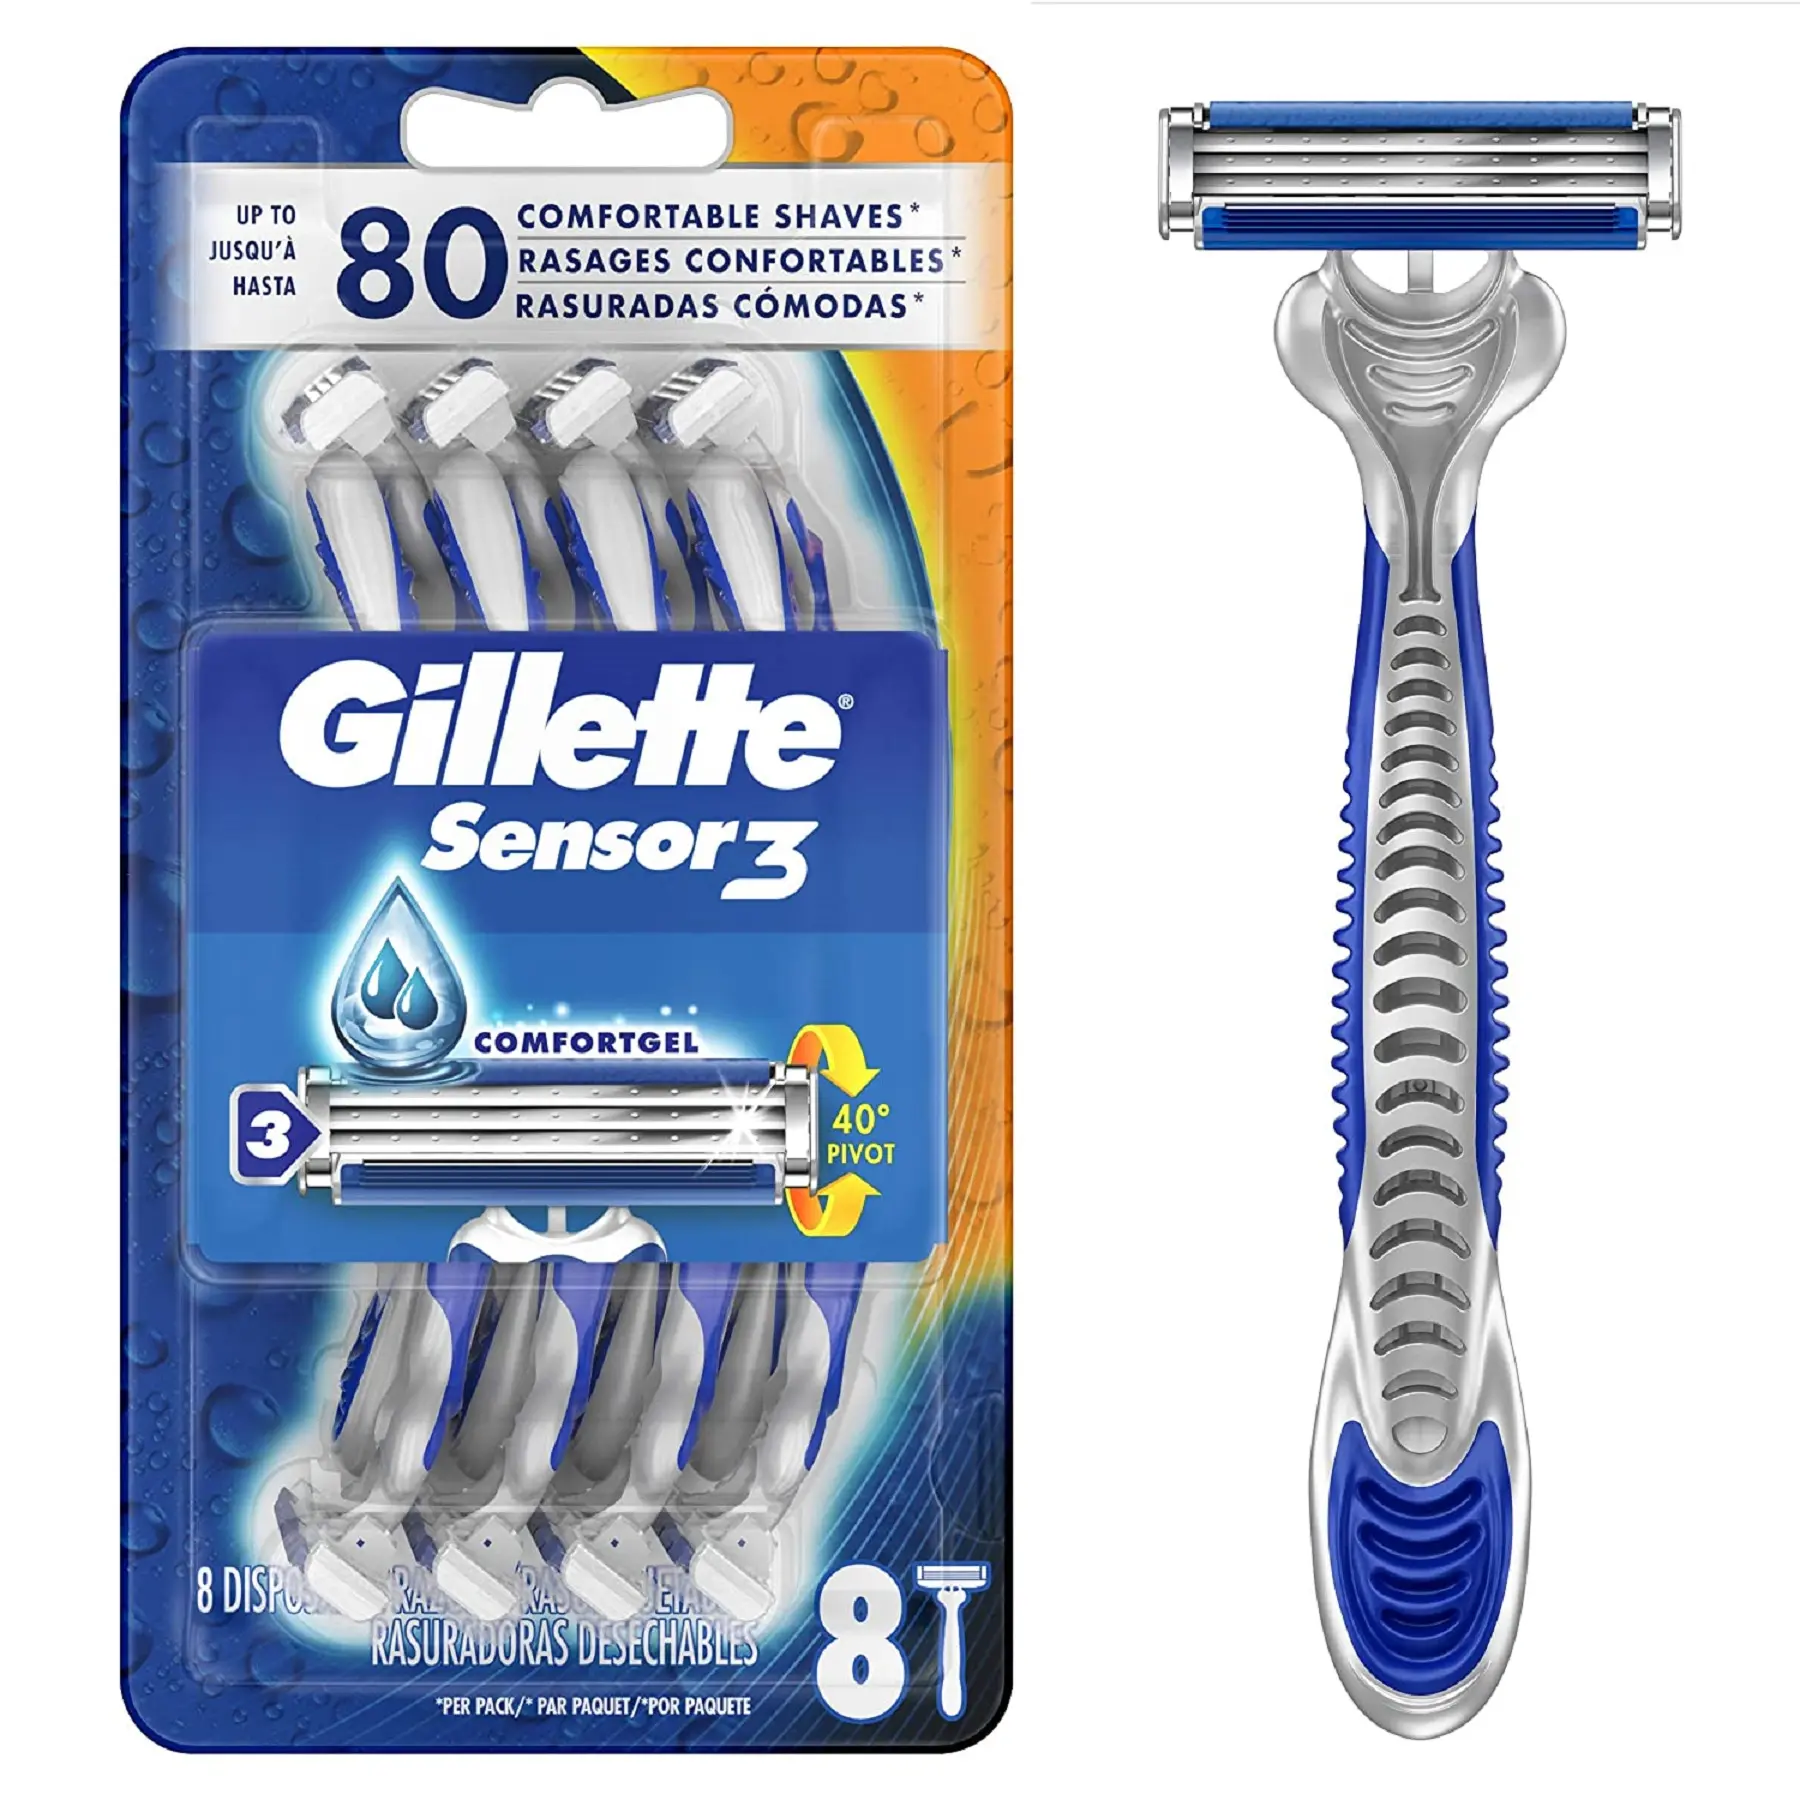 Gillette Mach3/Gillette Shave Disposable Razor Blades